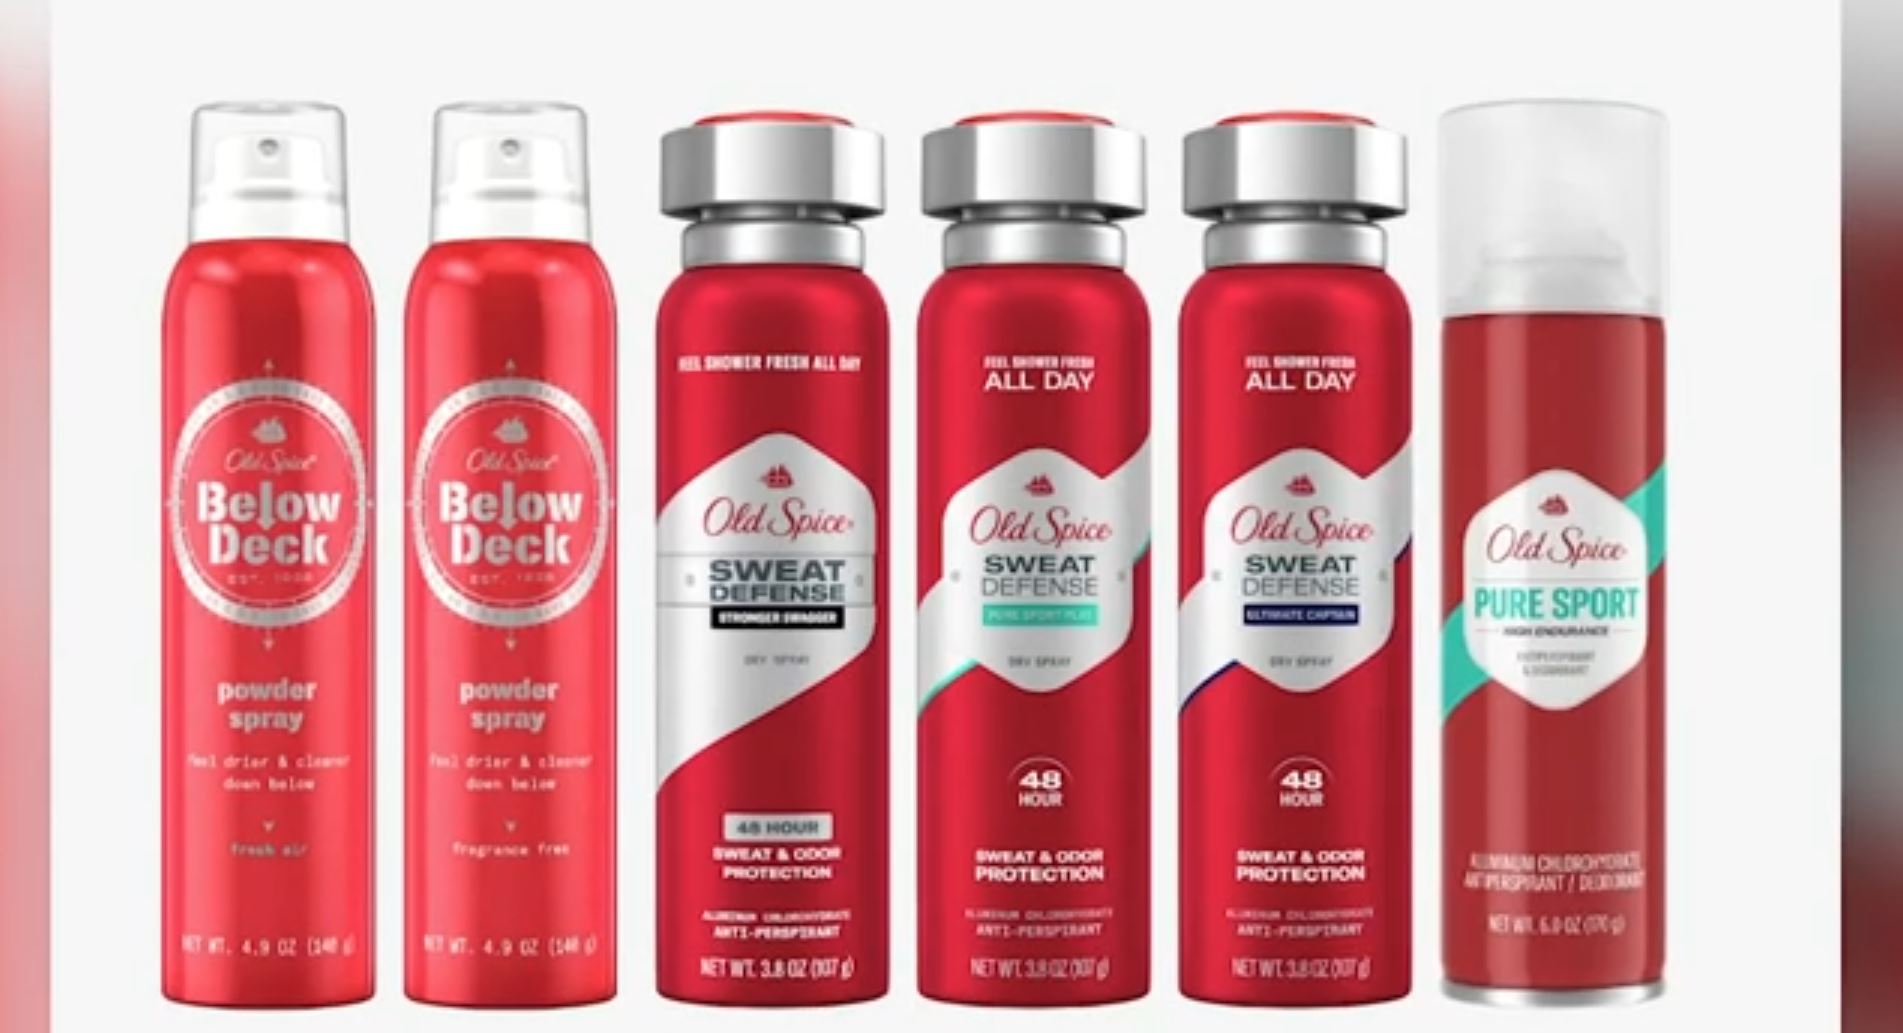 Spice, Secret deodorant sprays recalled